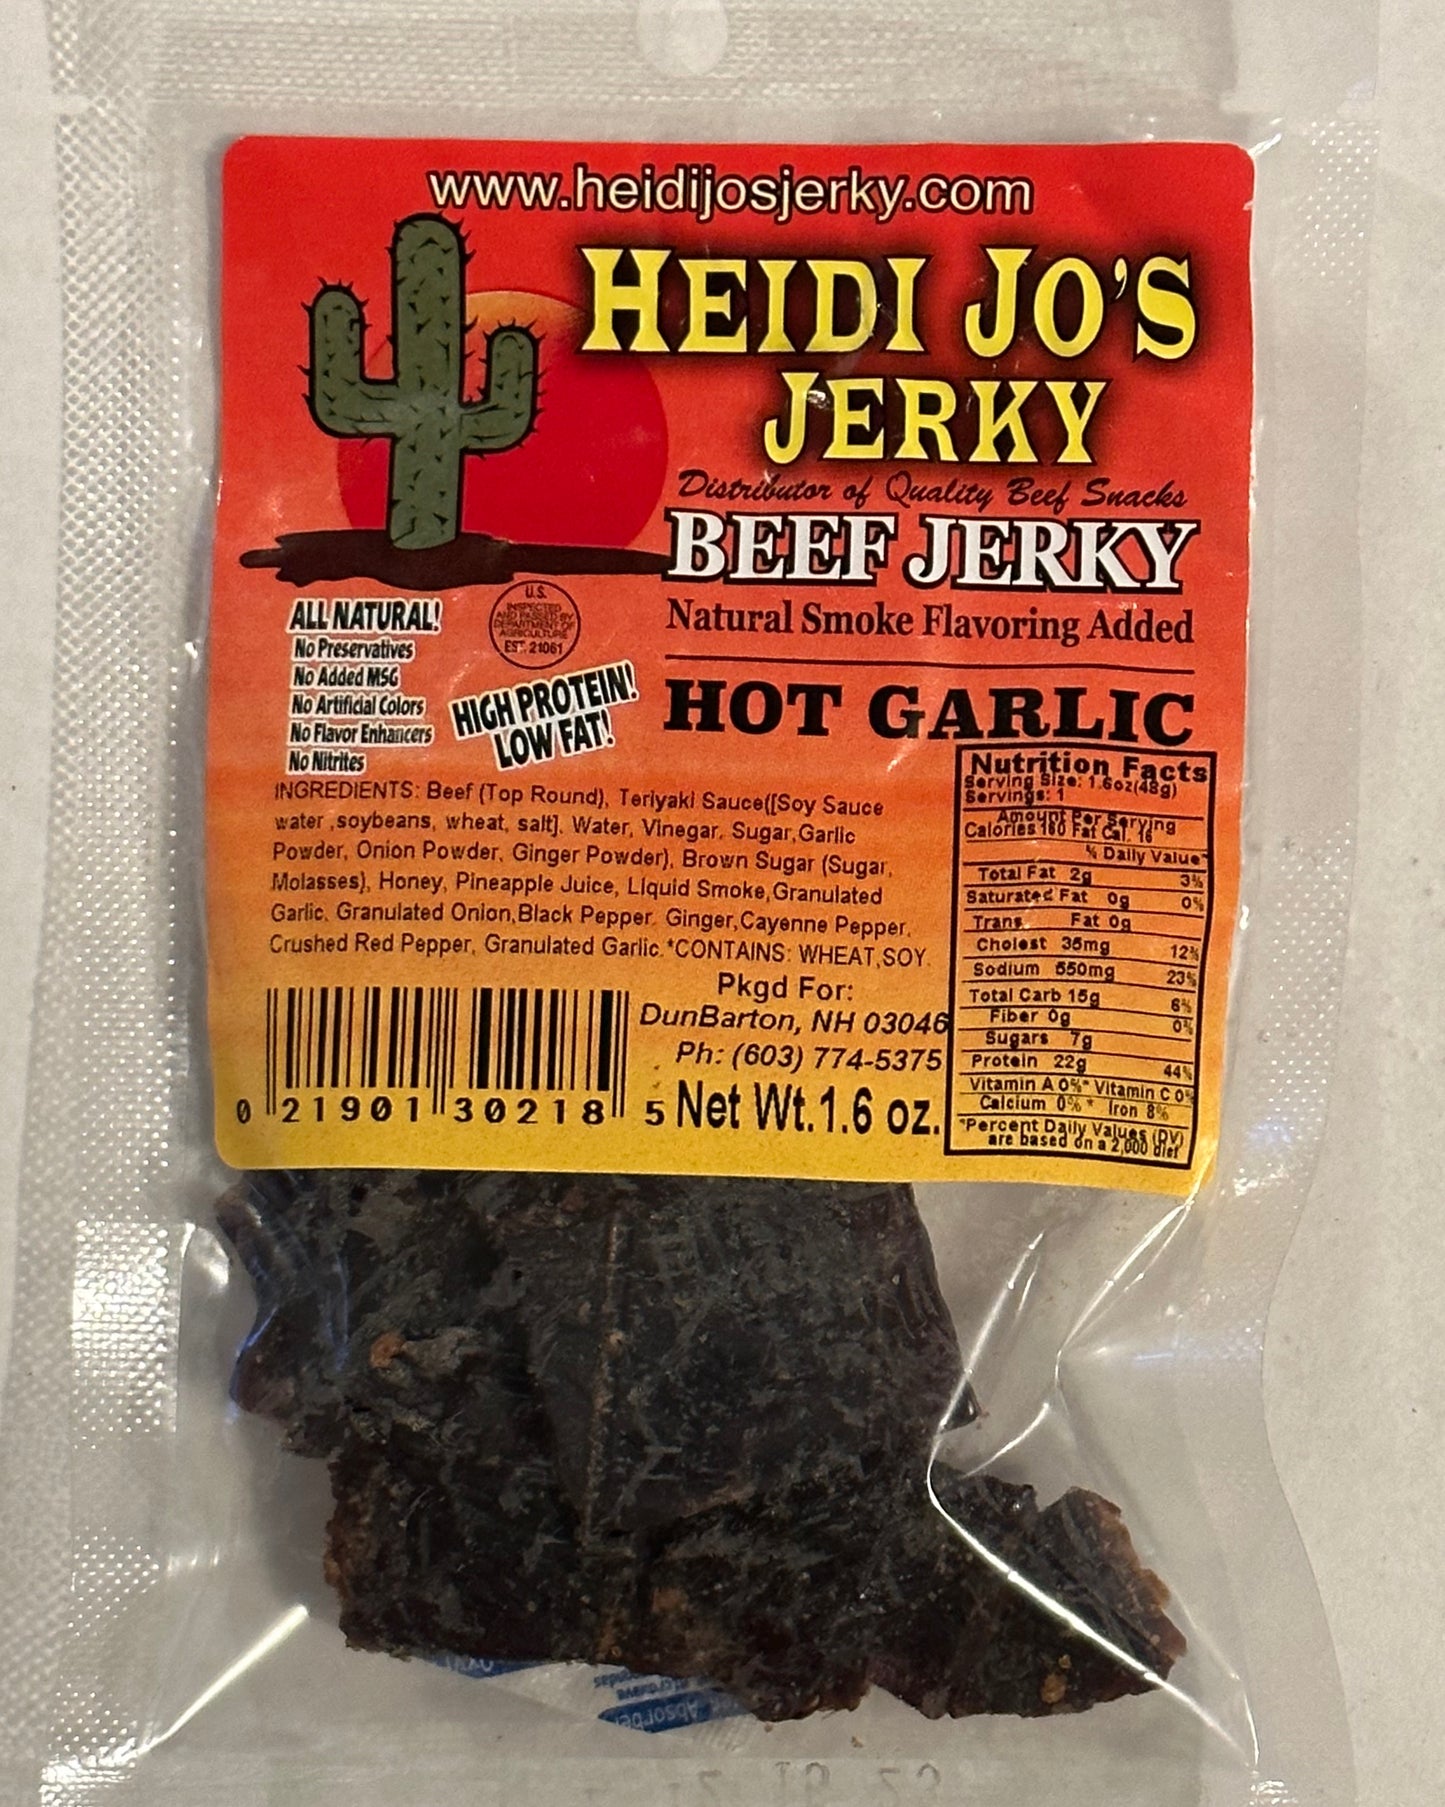 Hot Garlic Beef Jerky